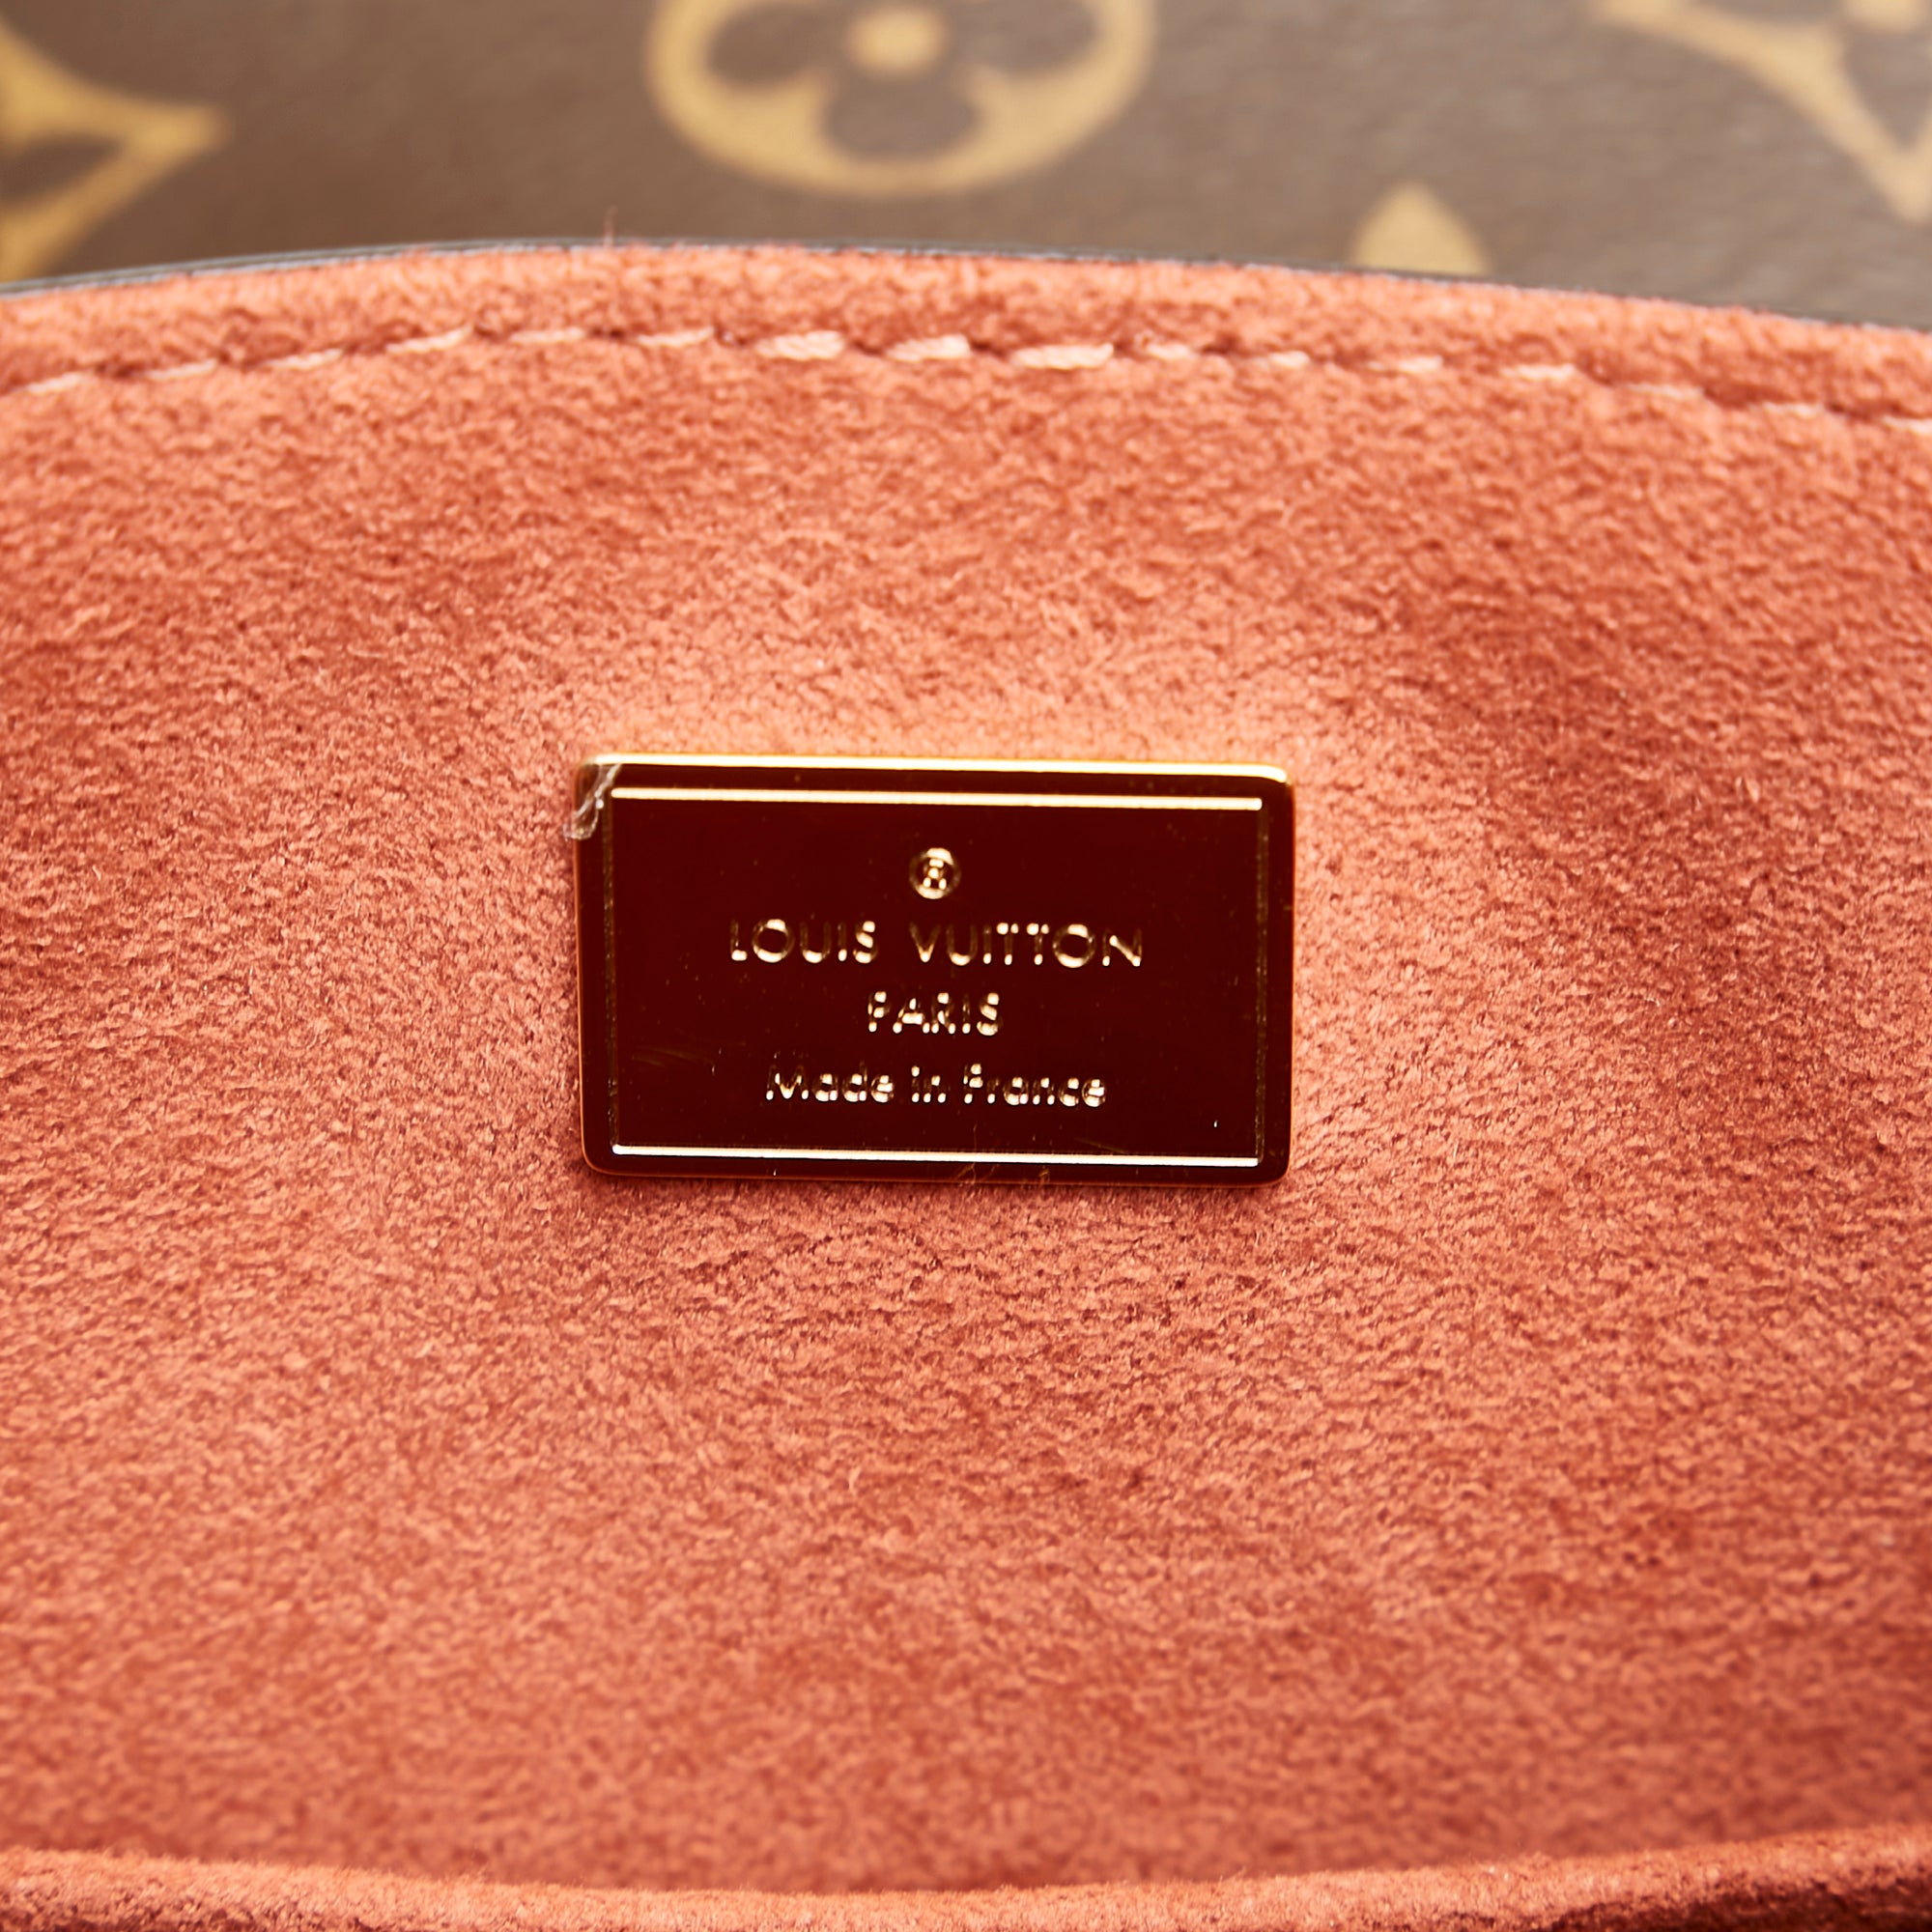 Louis Vuitton Monogram Vernis Hot Springs Backpack - Pink